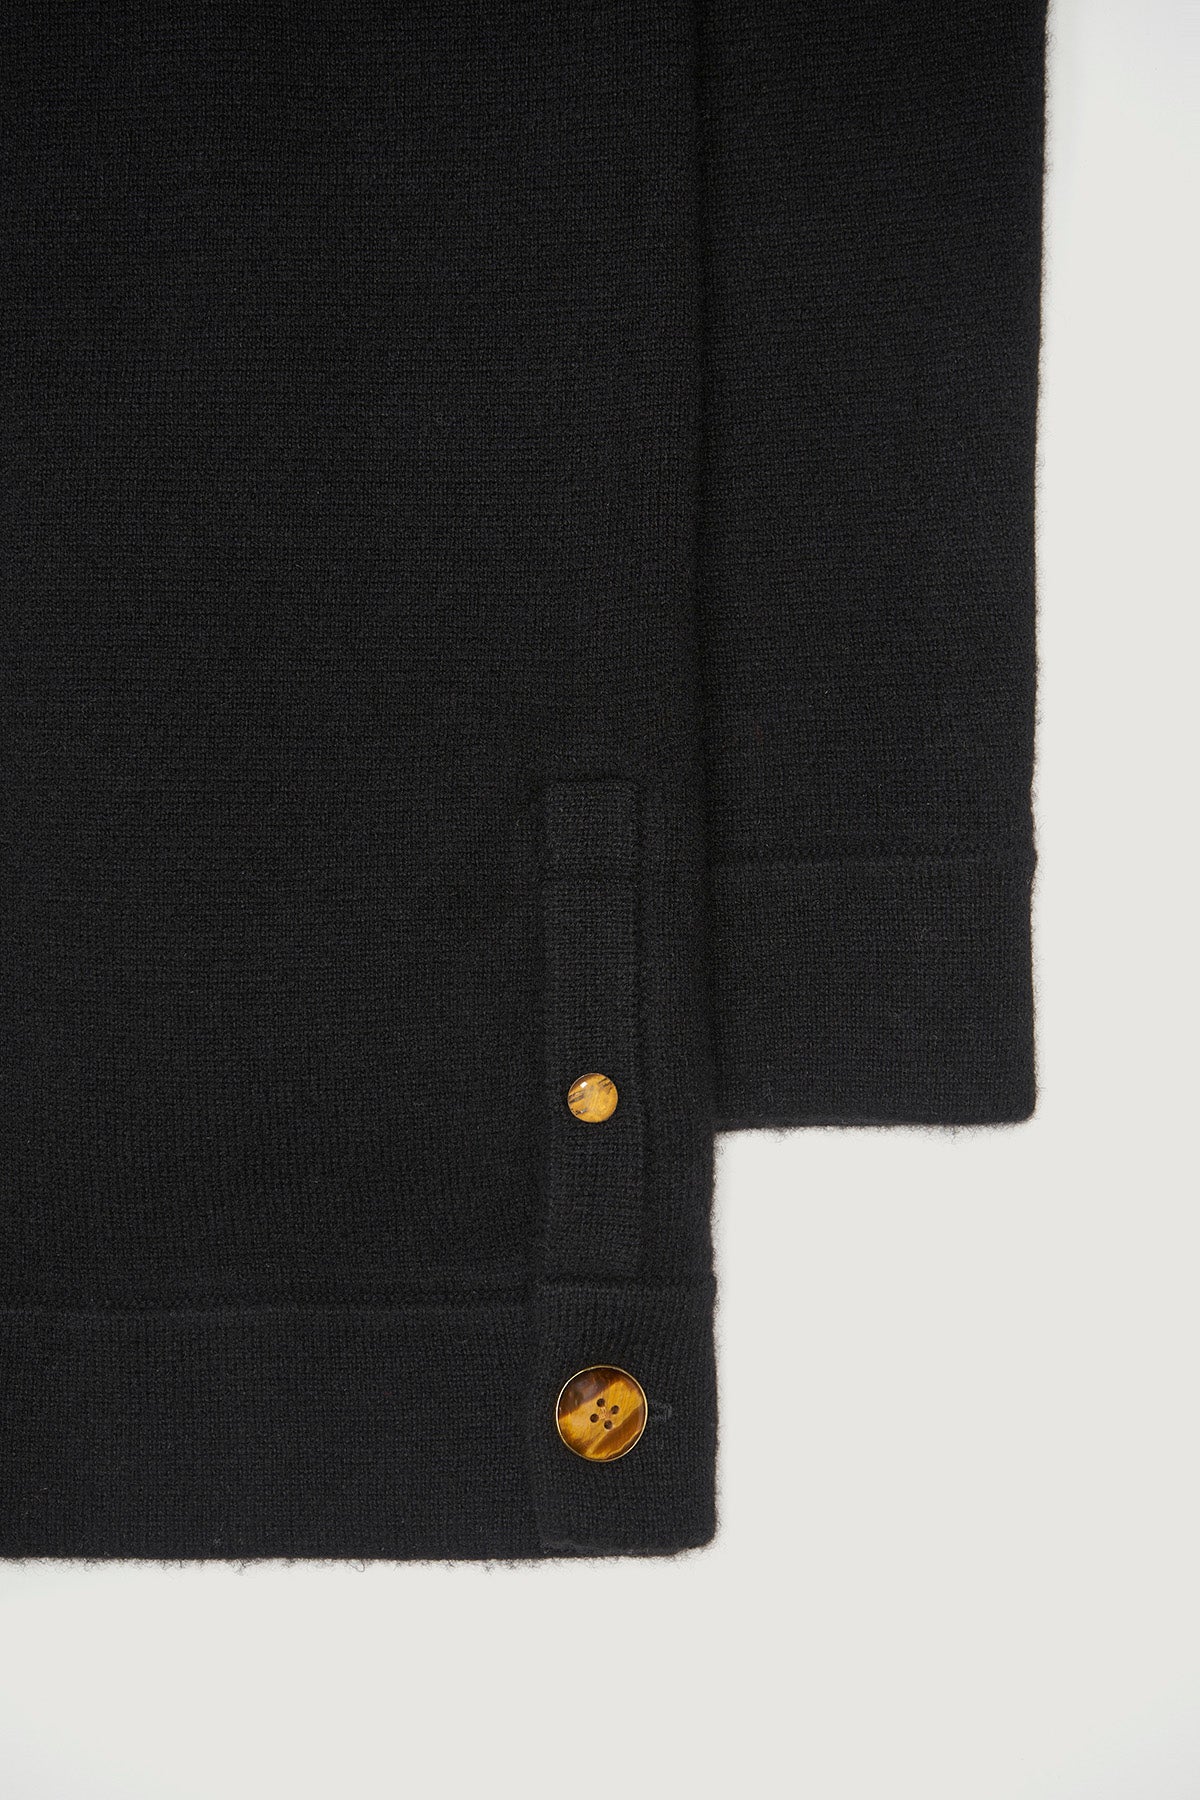 Black Milano Knit Cashmere Trouser